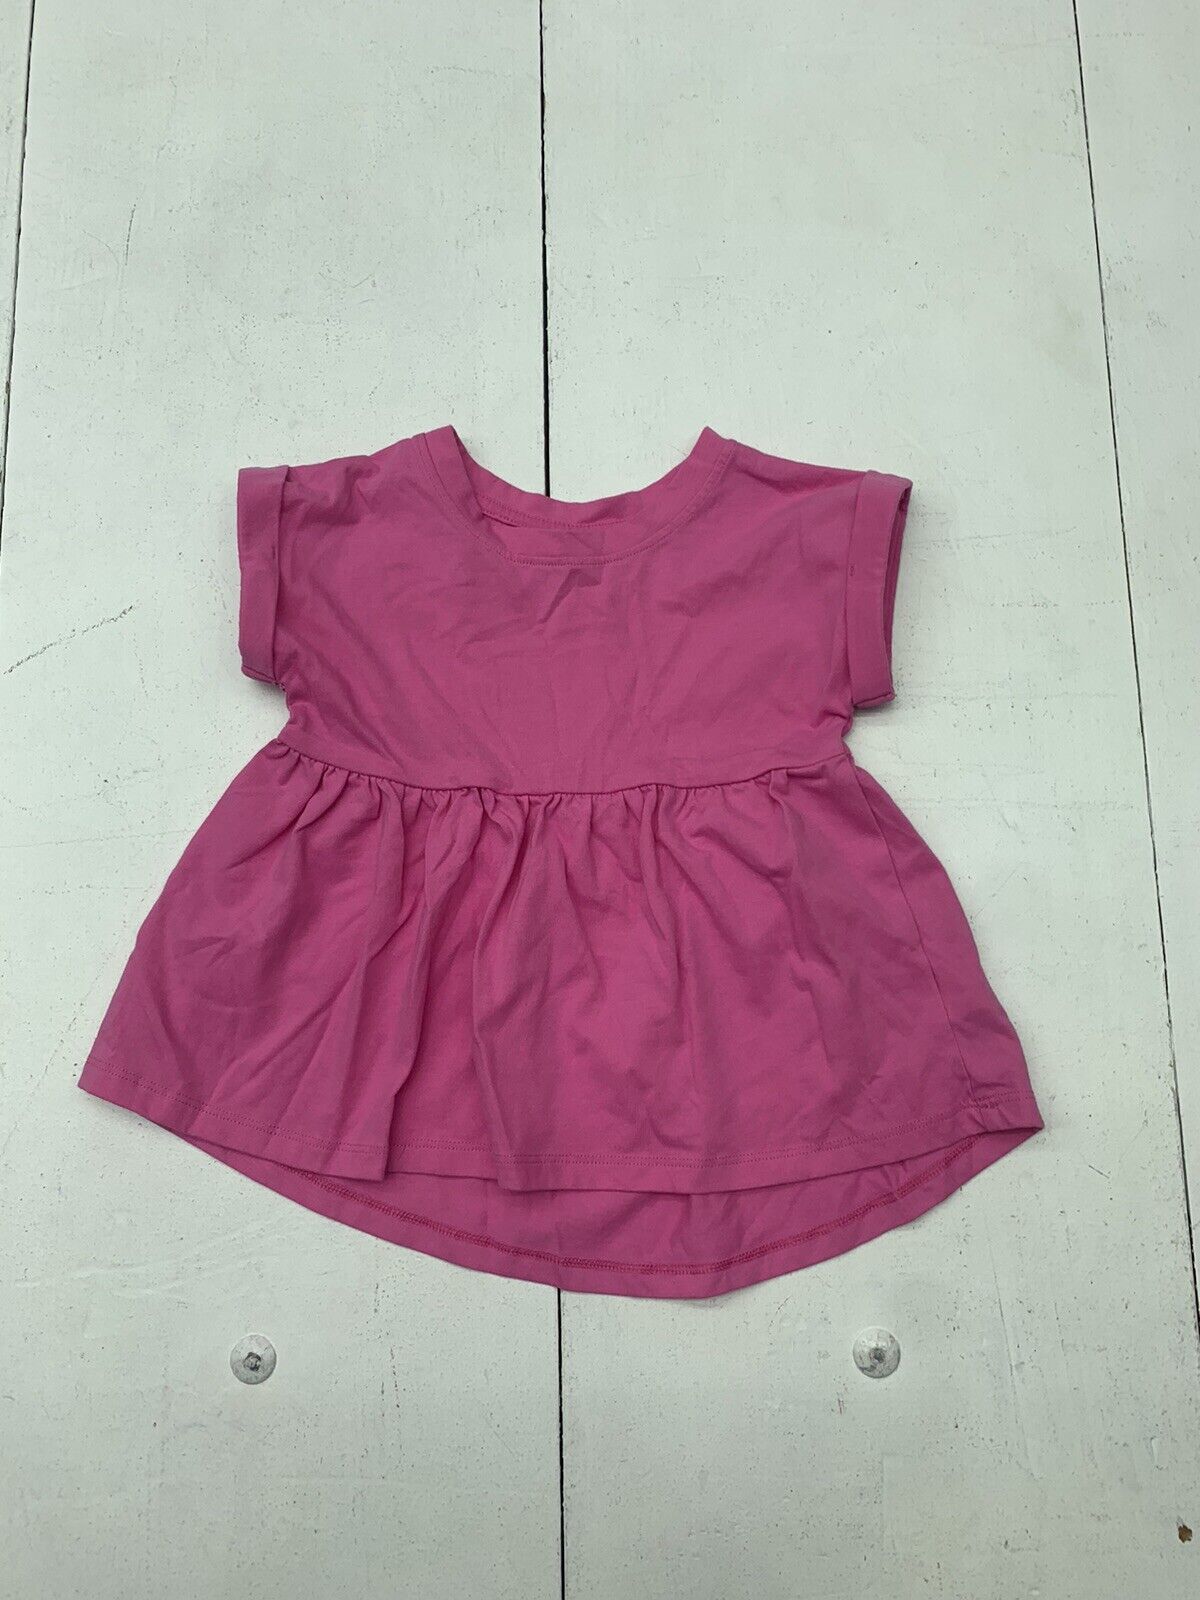 Cat & Jack Girls Pink Short Sleeve Shirt Size 4T